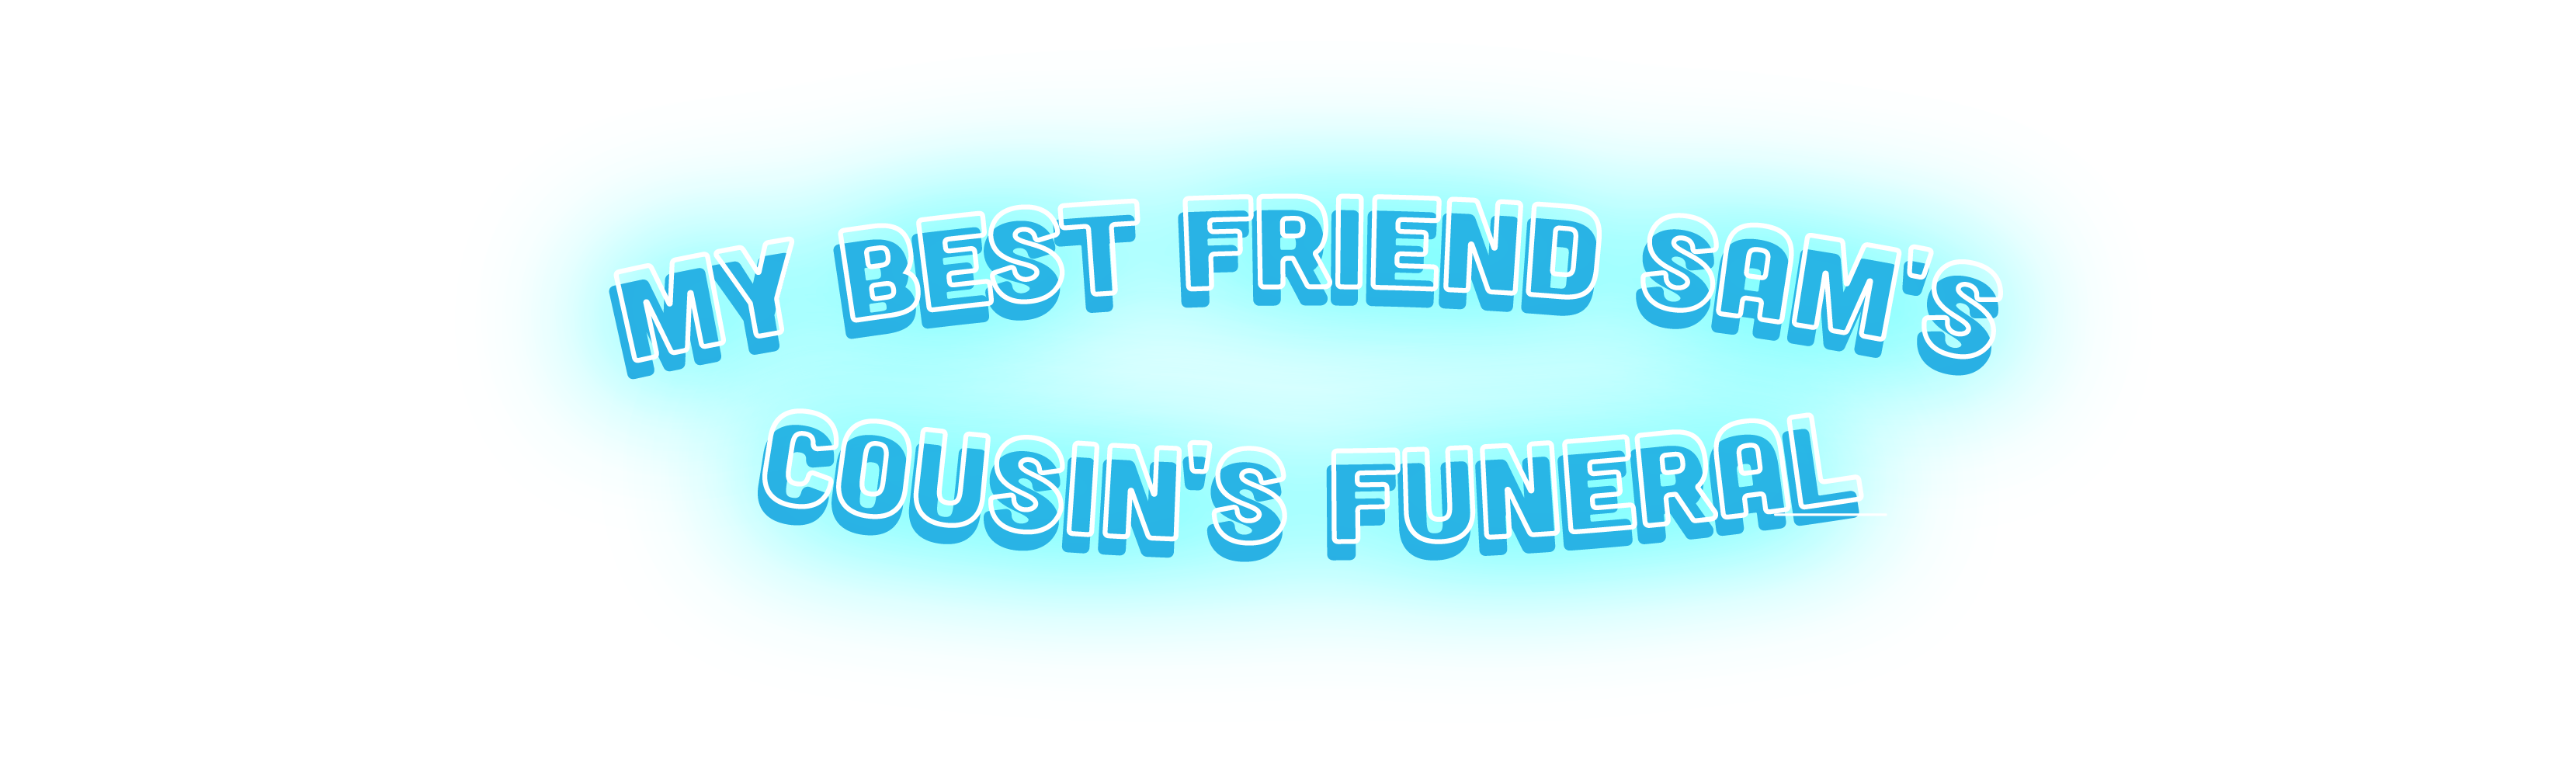 My Best Friend Sam's Cousin's Funeral